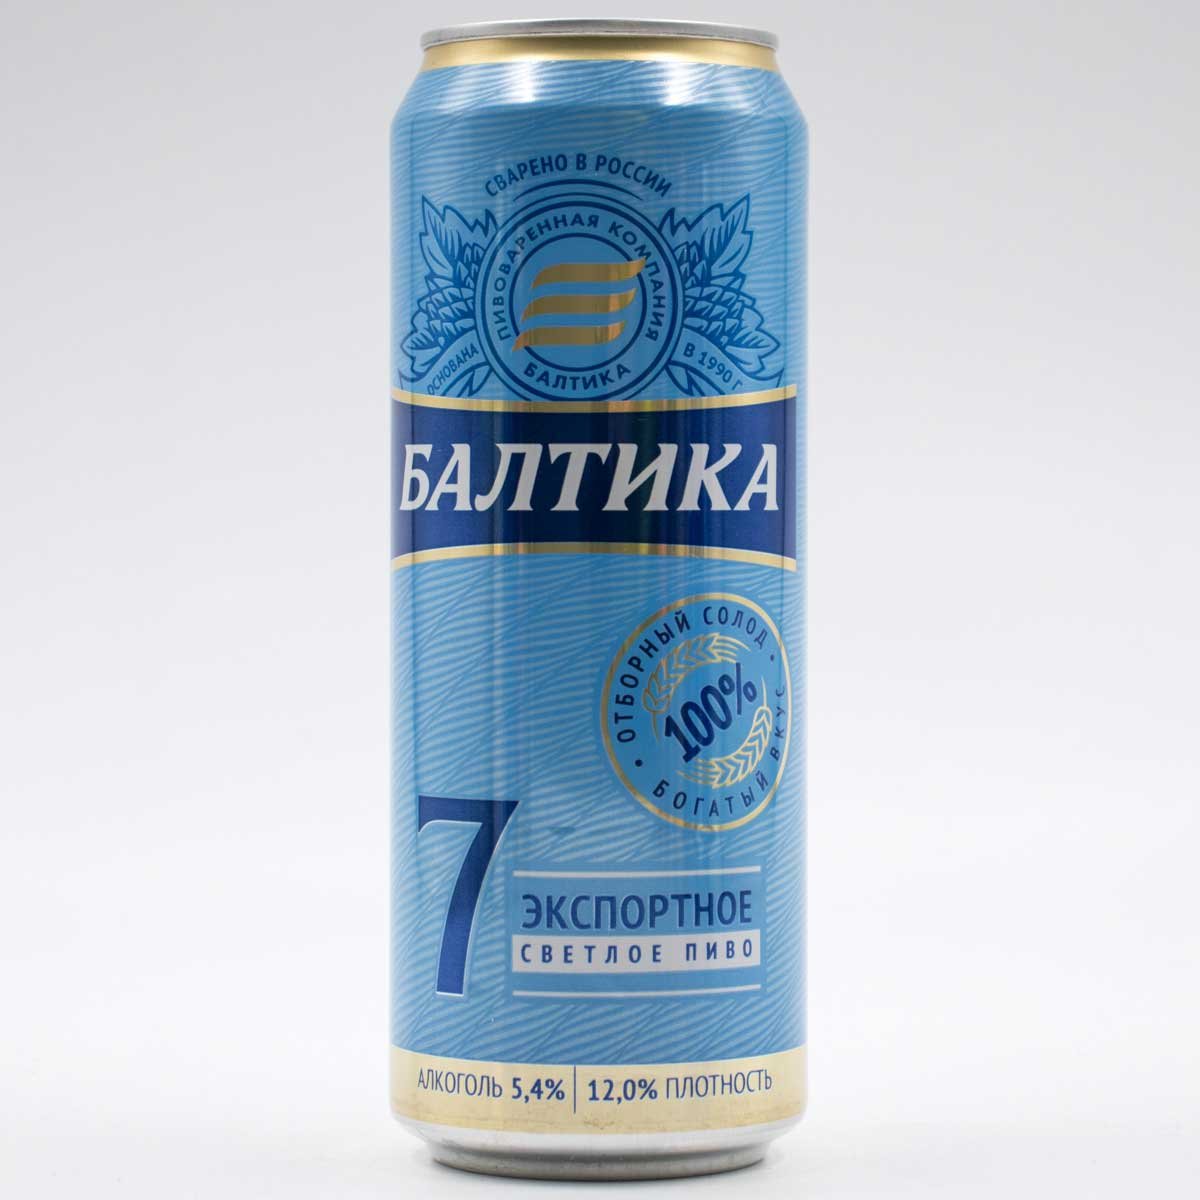 Балтика 7 экспортное. Пиво Балтика 7 Экспортное. Пиво Балтика Экспортное 7 светлое 0.45л. Балтика 7 0,45. Пиво Балтика 7 Экспортное светлое ж/б е/о 0,5л.